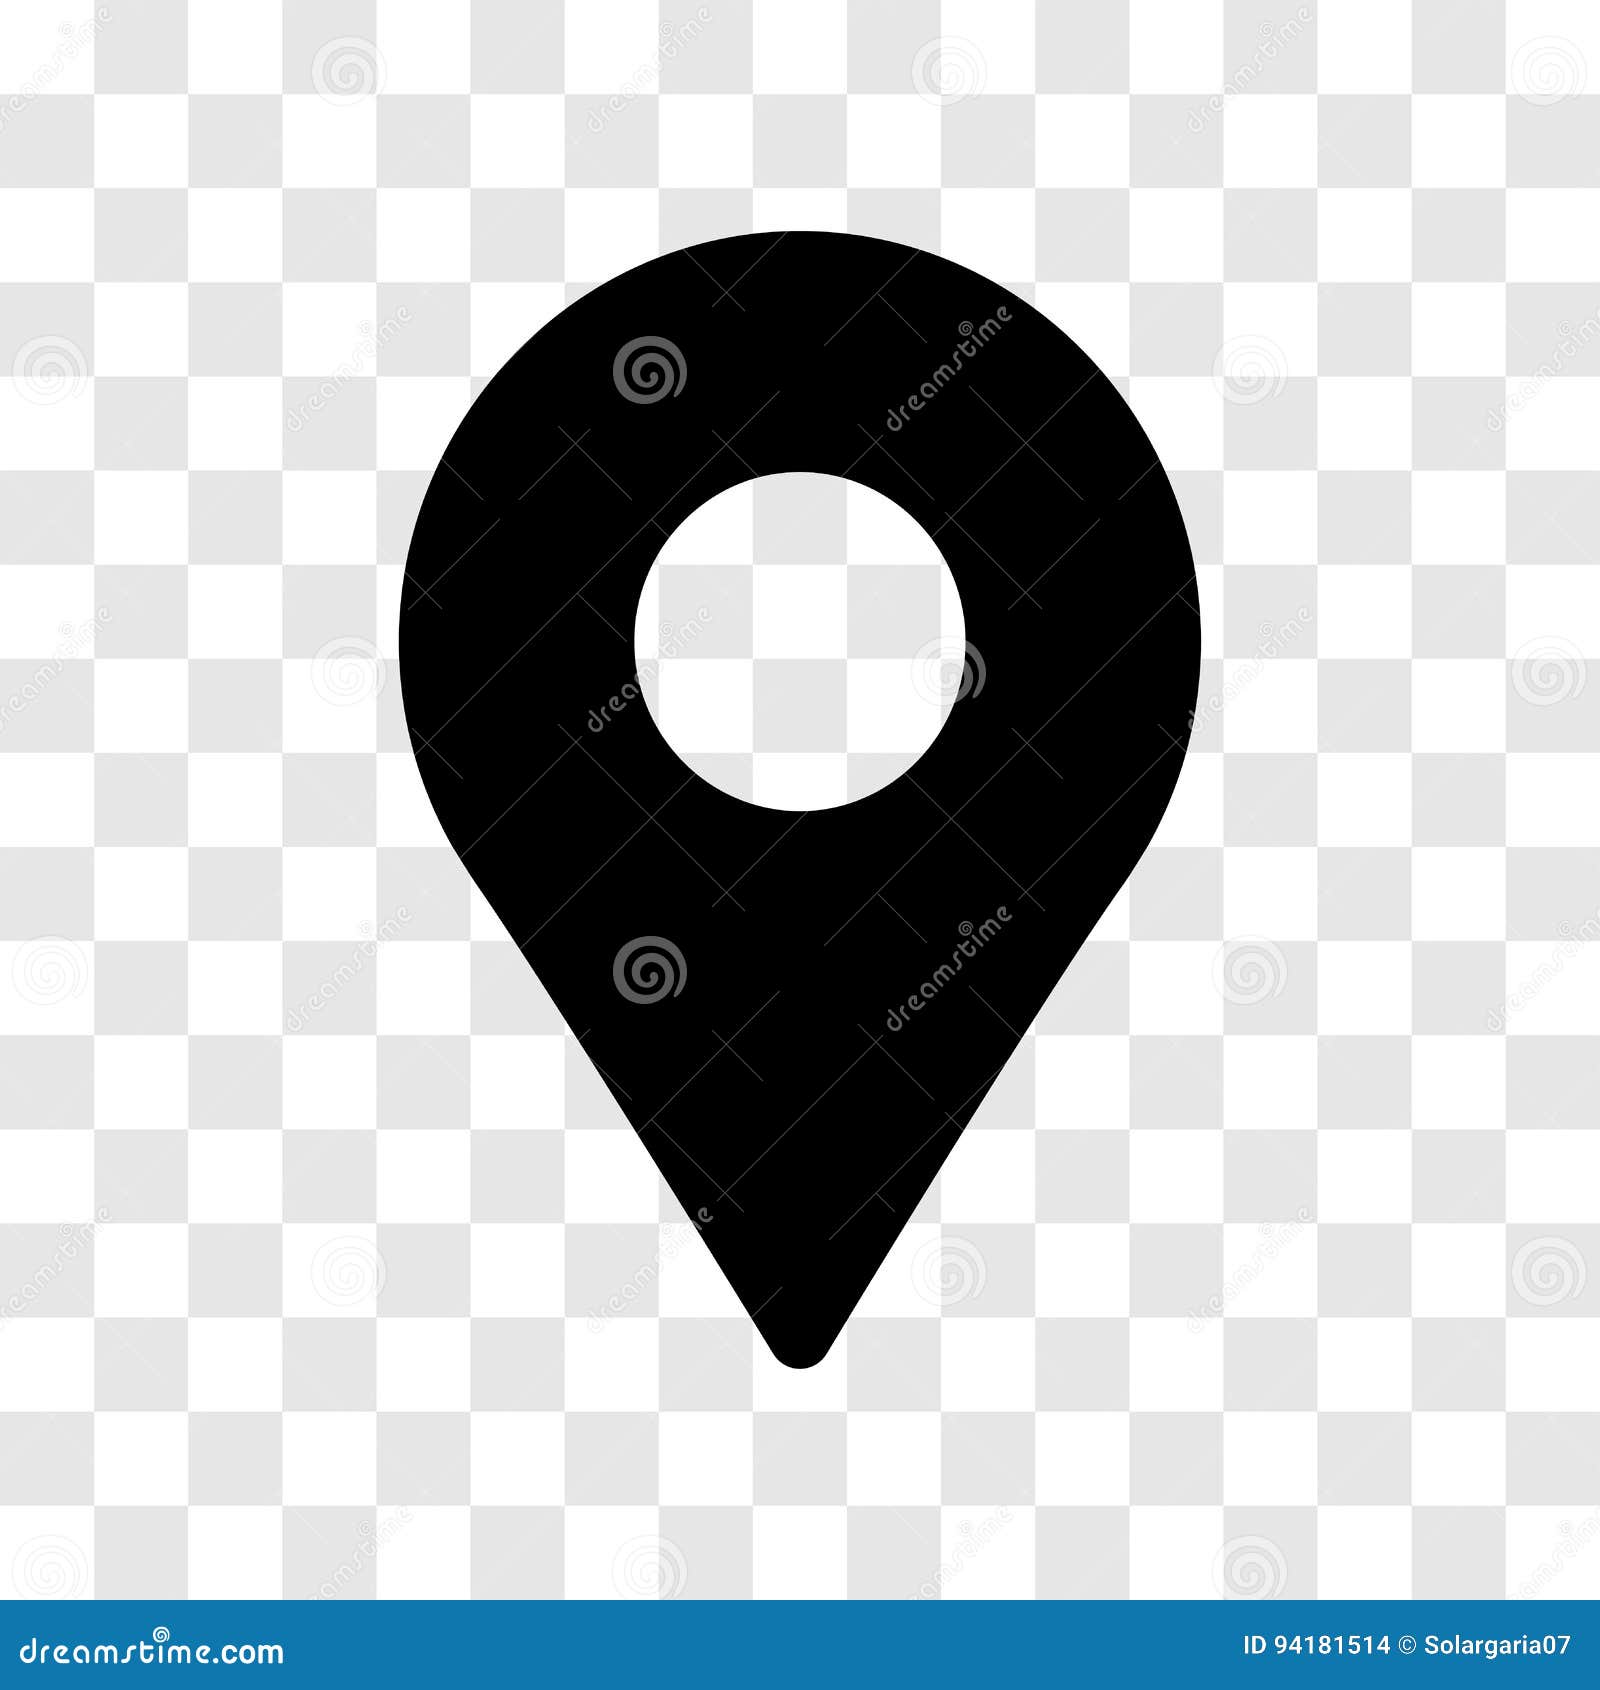 pin location icon -  iconic 